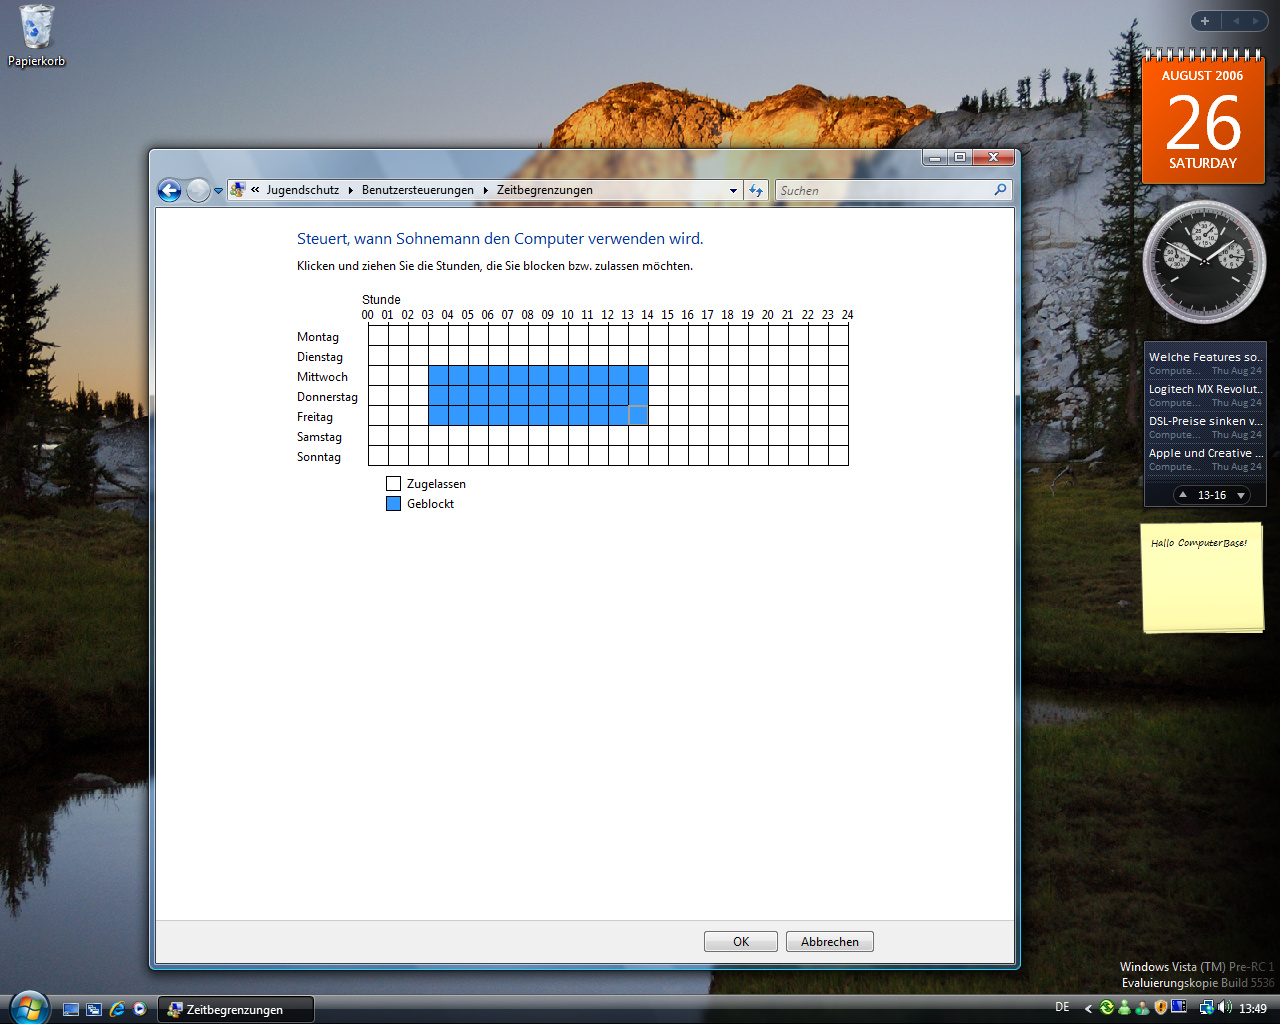 Windows Vista Build 5536 - Jugendschutz